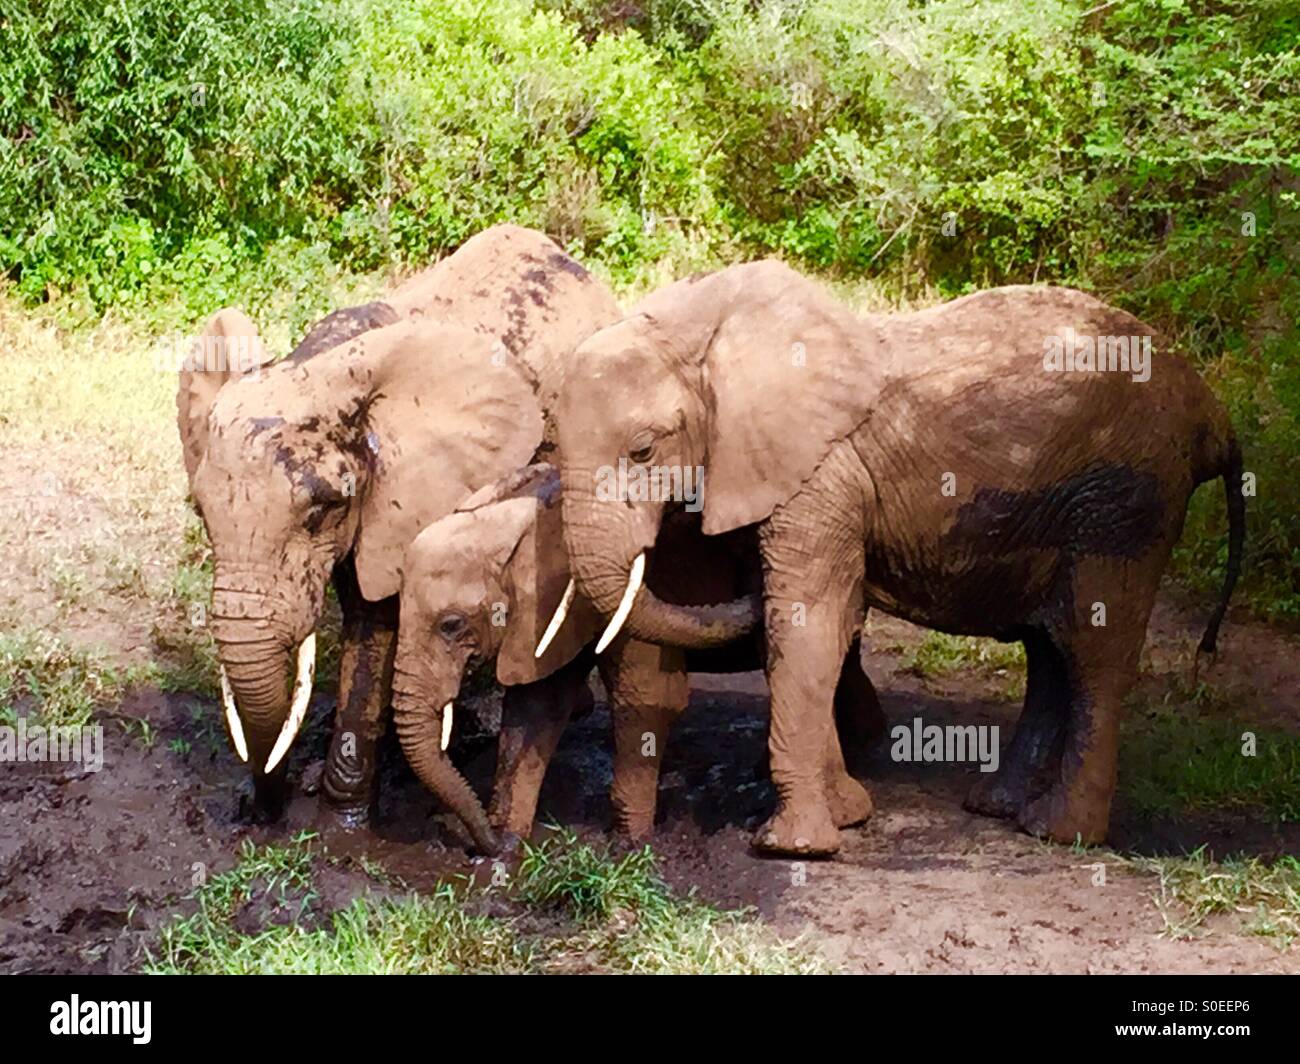 Three elephants at a watering hole in Tanzania Stock Photo